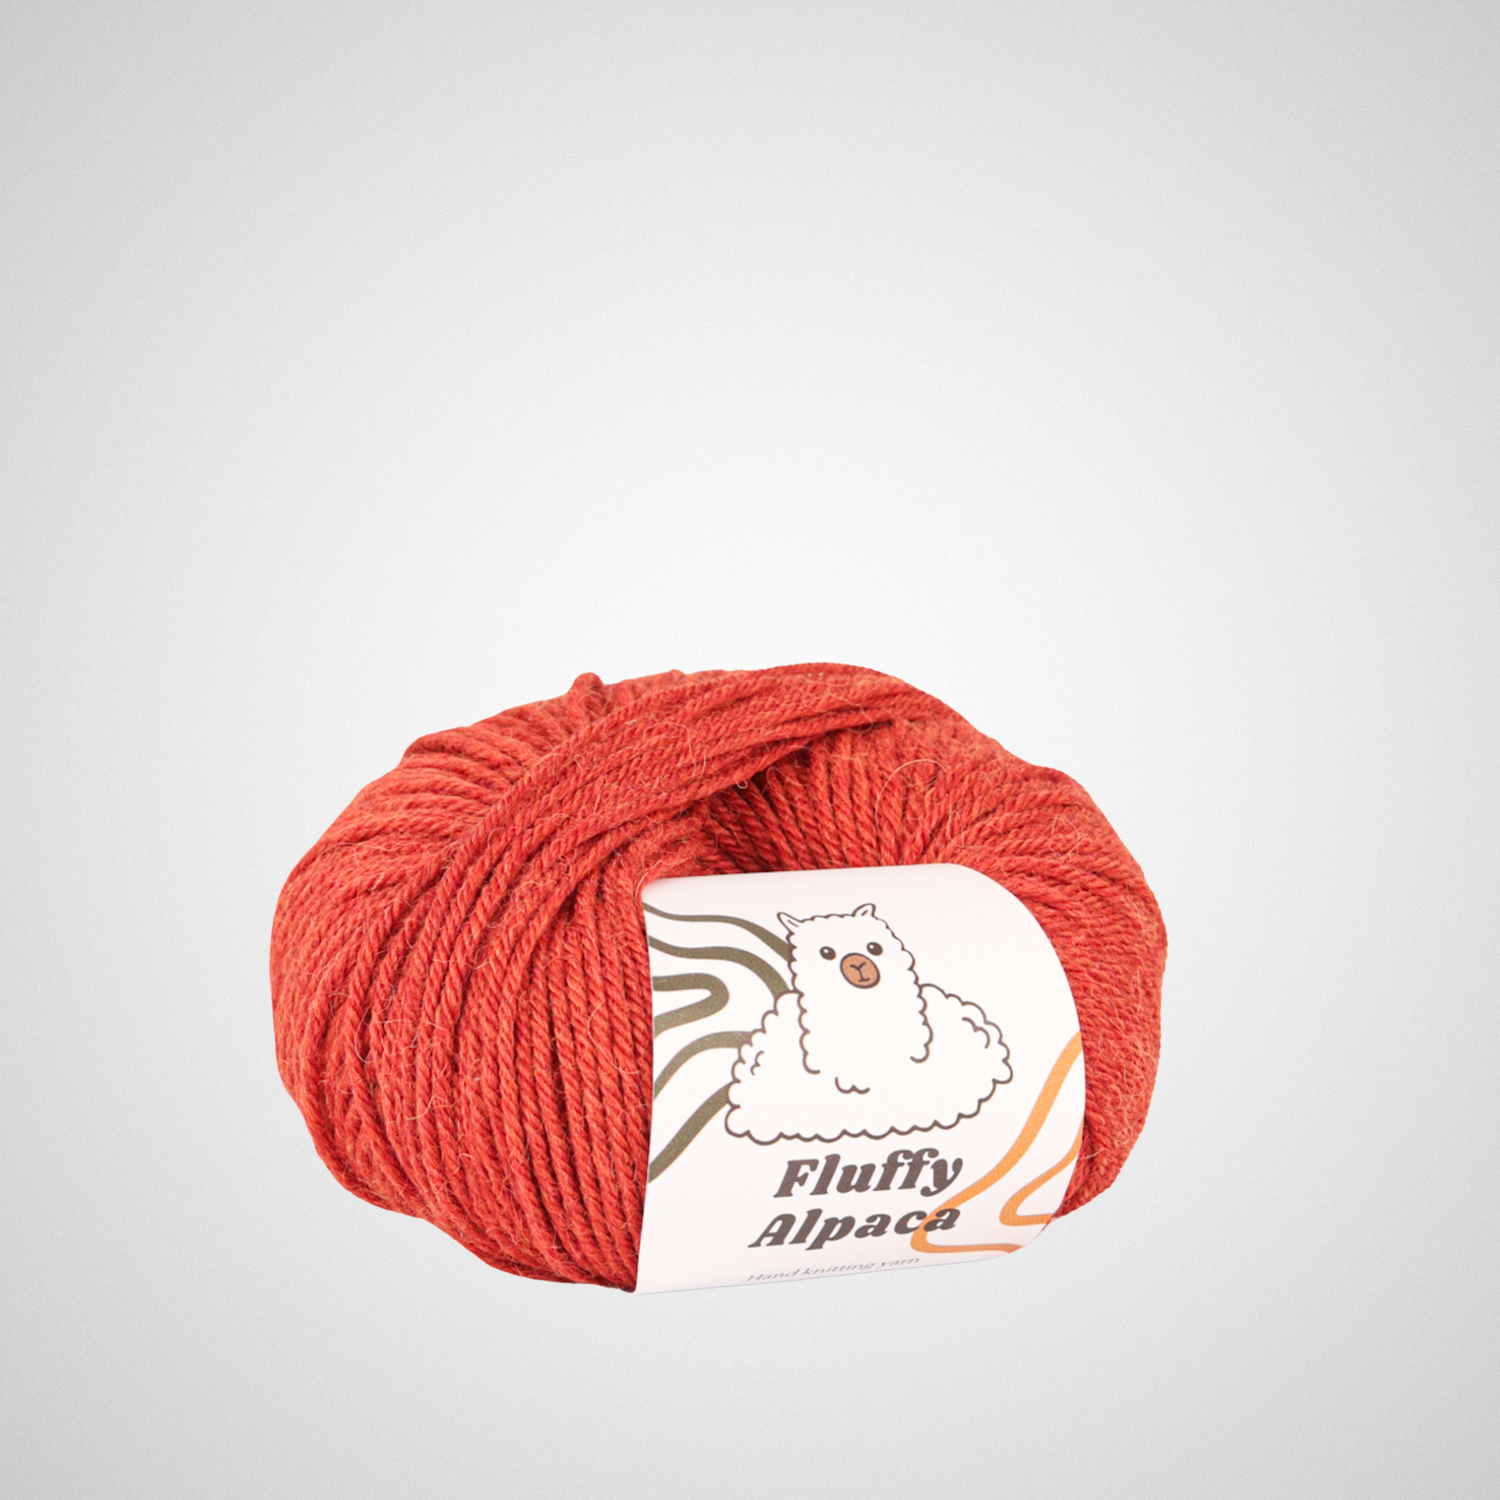 Fluffy Alpaca - Strikkegarn - 100% alpaca uld - Alle farver